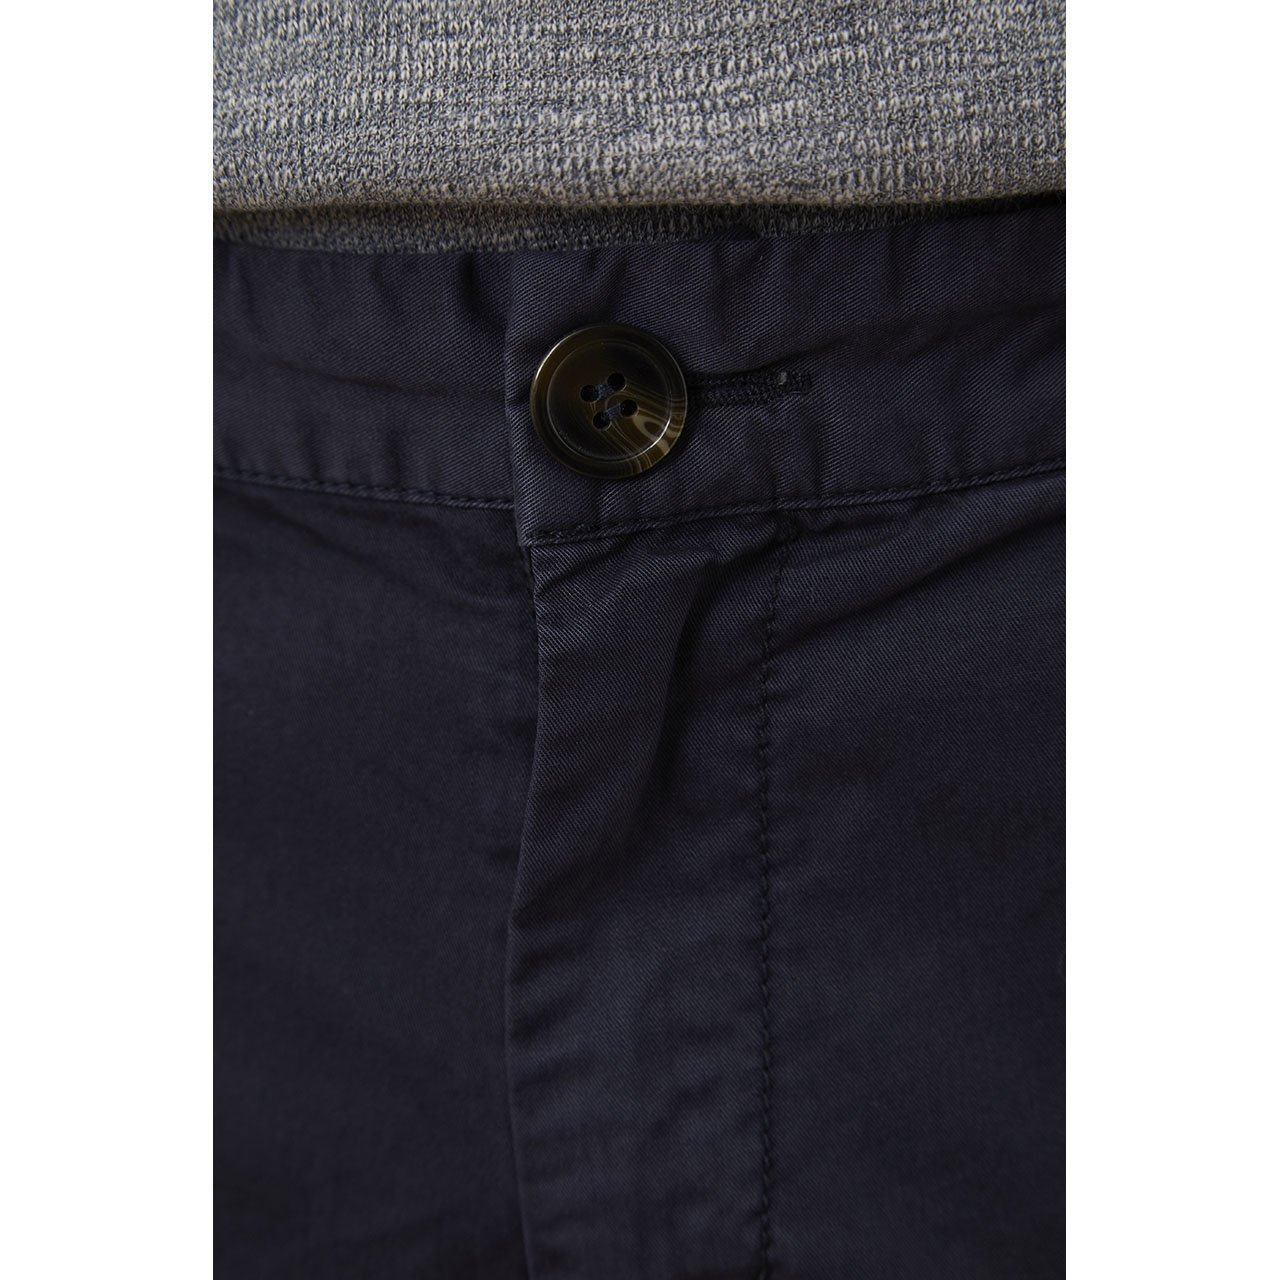 PX Clothing Men's Dark Grey Adan Dyed Five Pocket Twill Shorts - Men - Apparel - Shorts - Casual - Benn~Burry